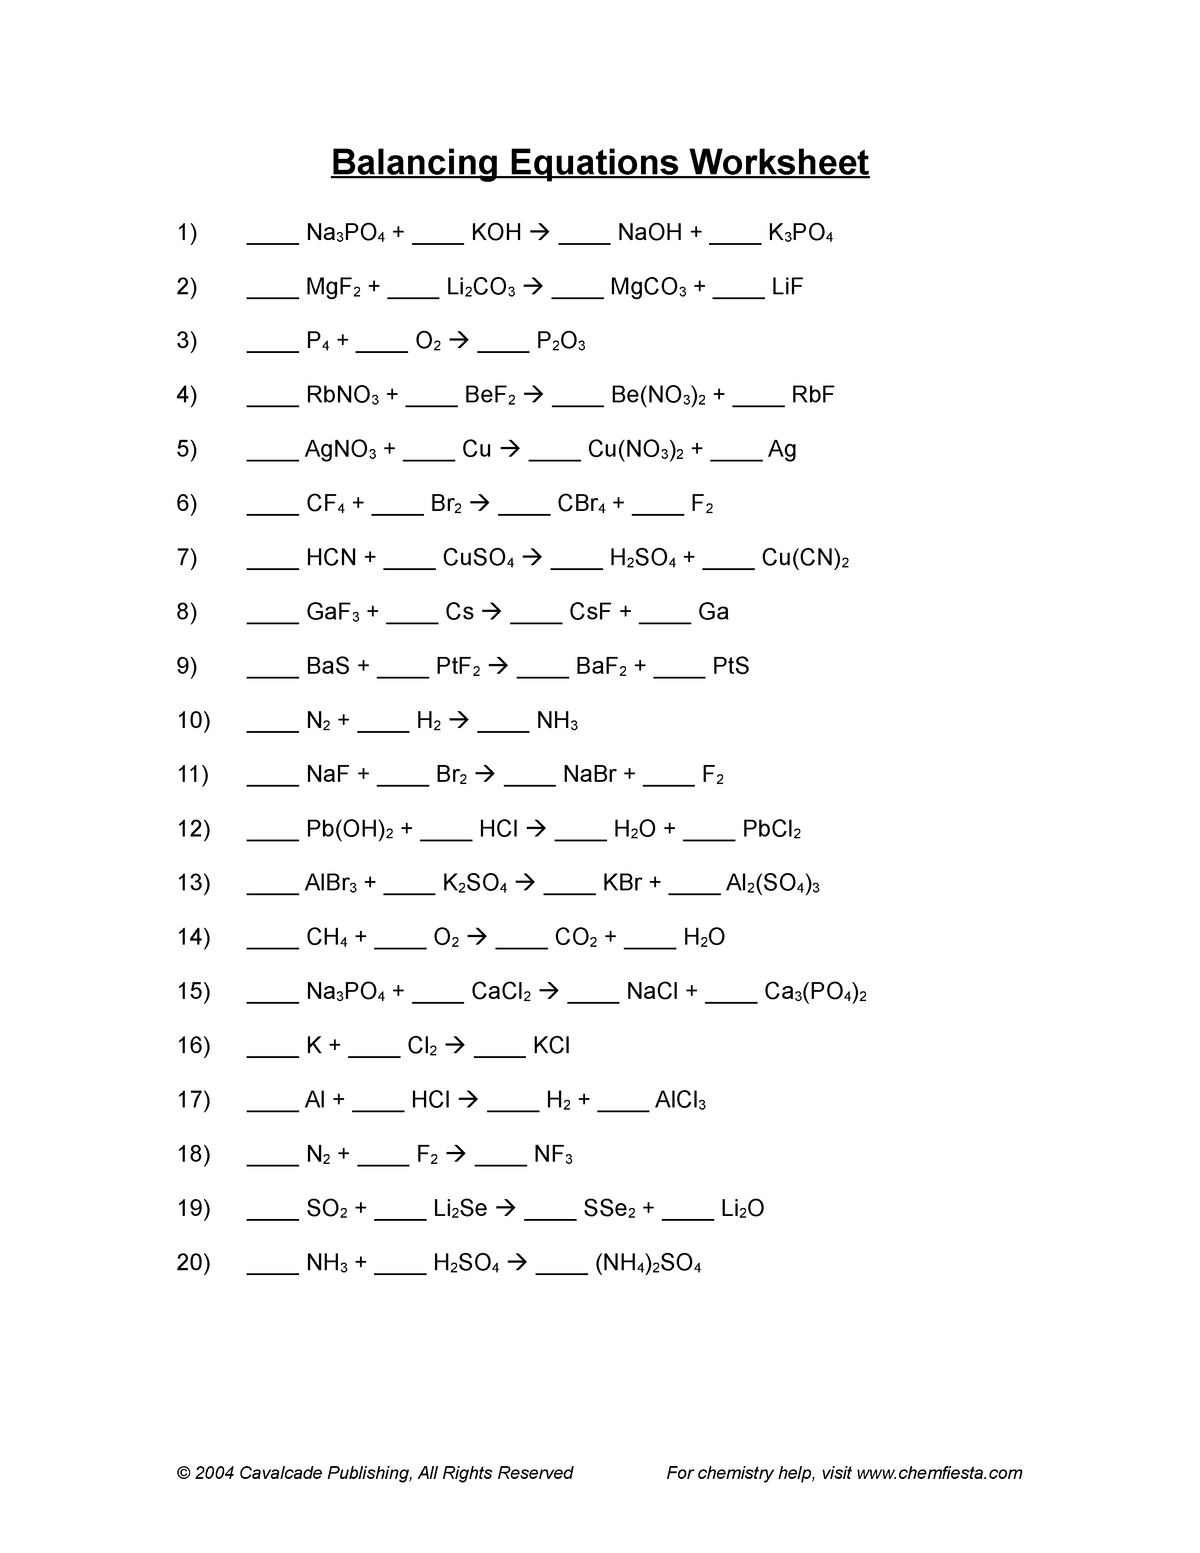 Balancing equations worksheet - CHM 23C - Introduction To With Balancing Equations Practice Worksheet Answers